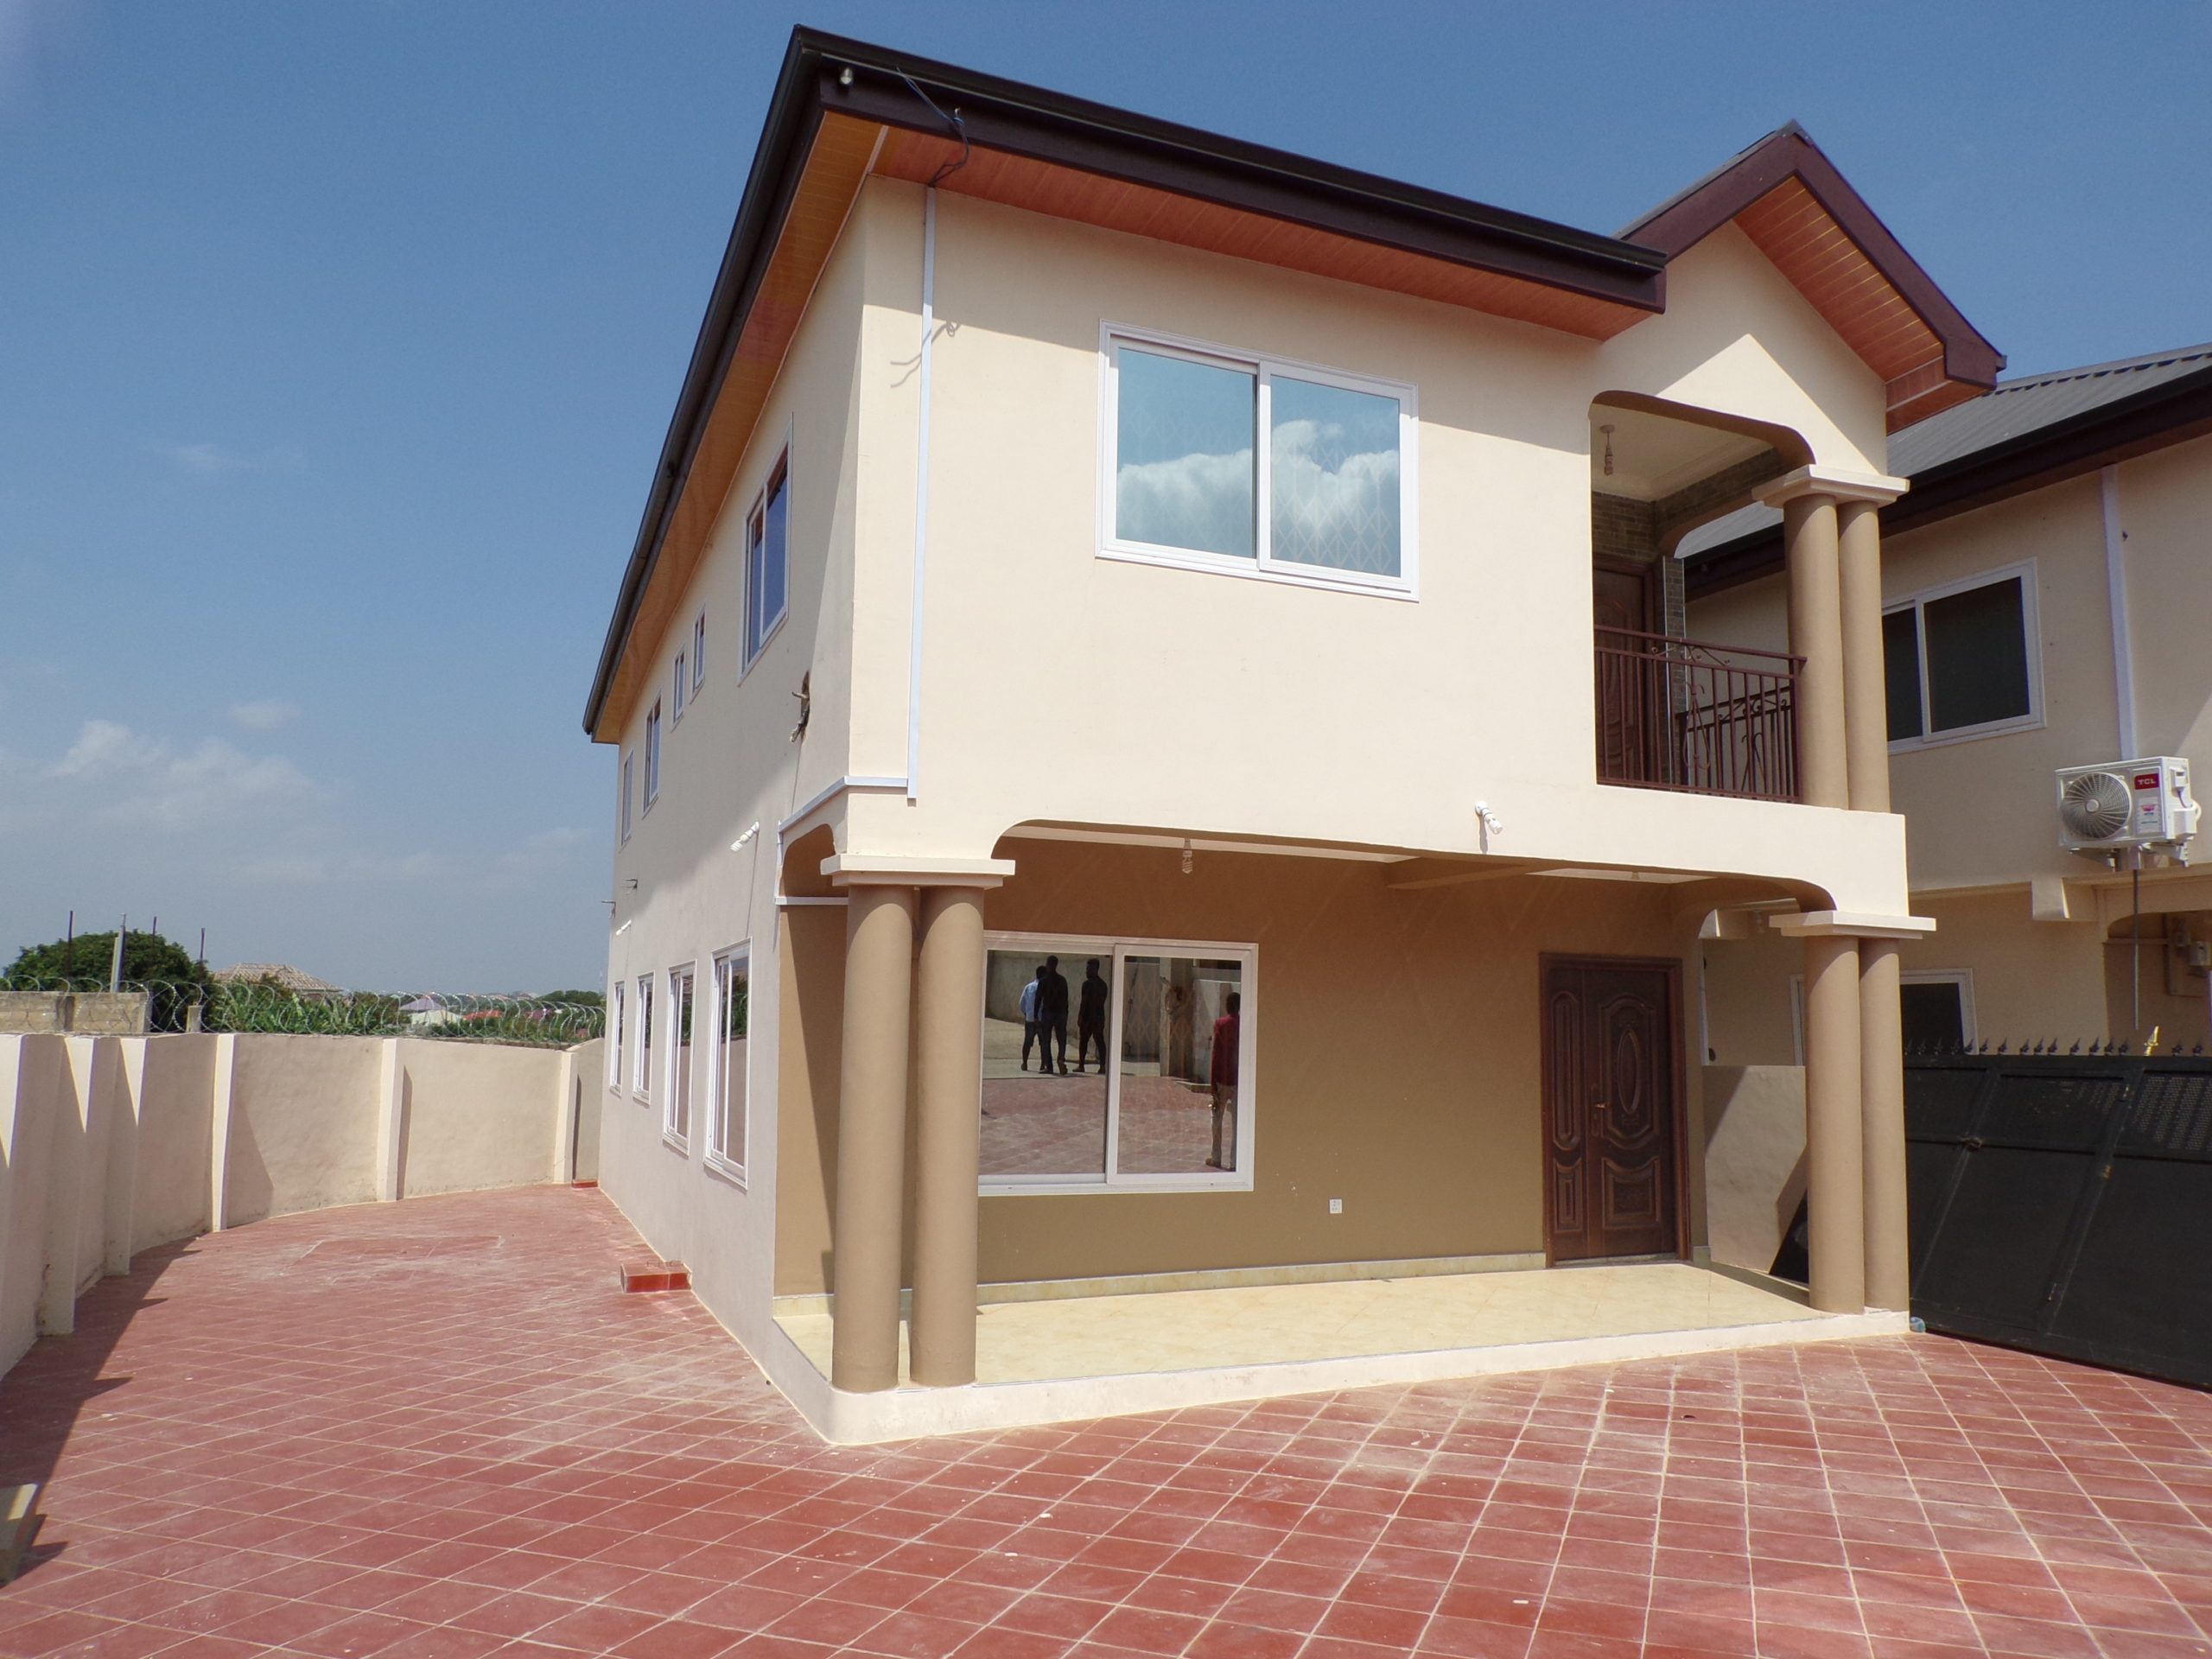 3 BEDROOM HOUSE FOR SALE AT ABOKOBI